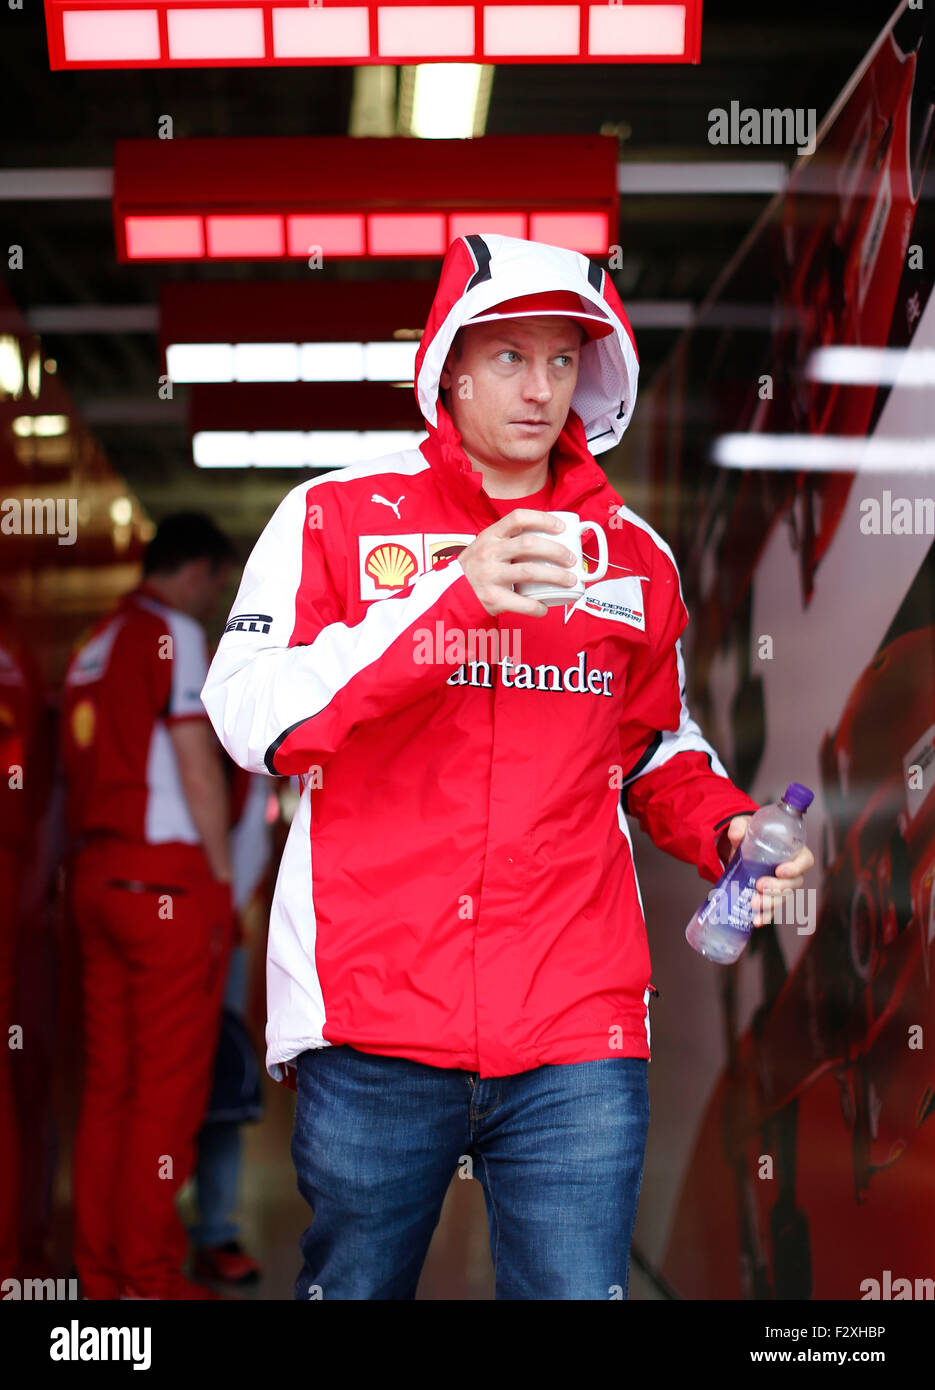 Motorsports: FIA Formula One World Championship 2015, Grand Prix of Japan, #7 Kimi Raikkonen (FIN, Scuderia Ferrari), Stock Photo